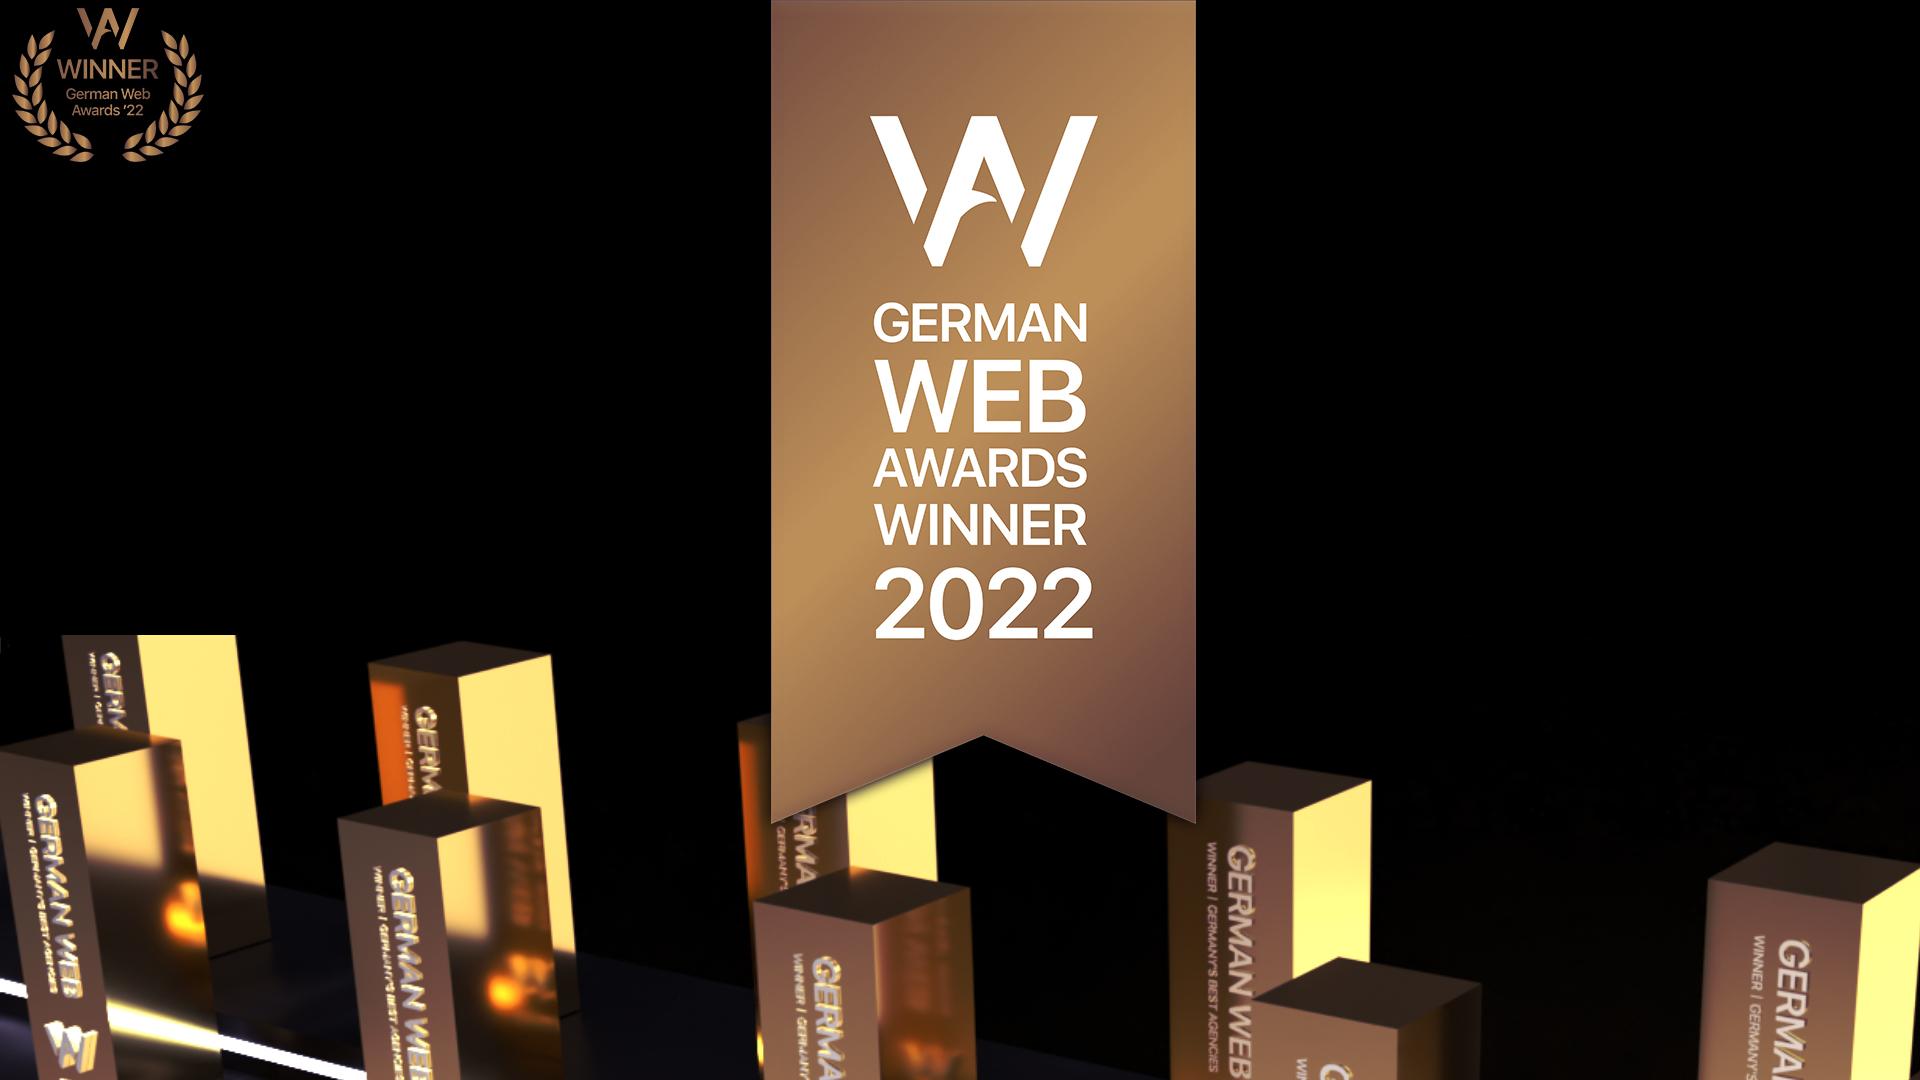 German Web Award Winner 2022